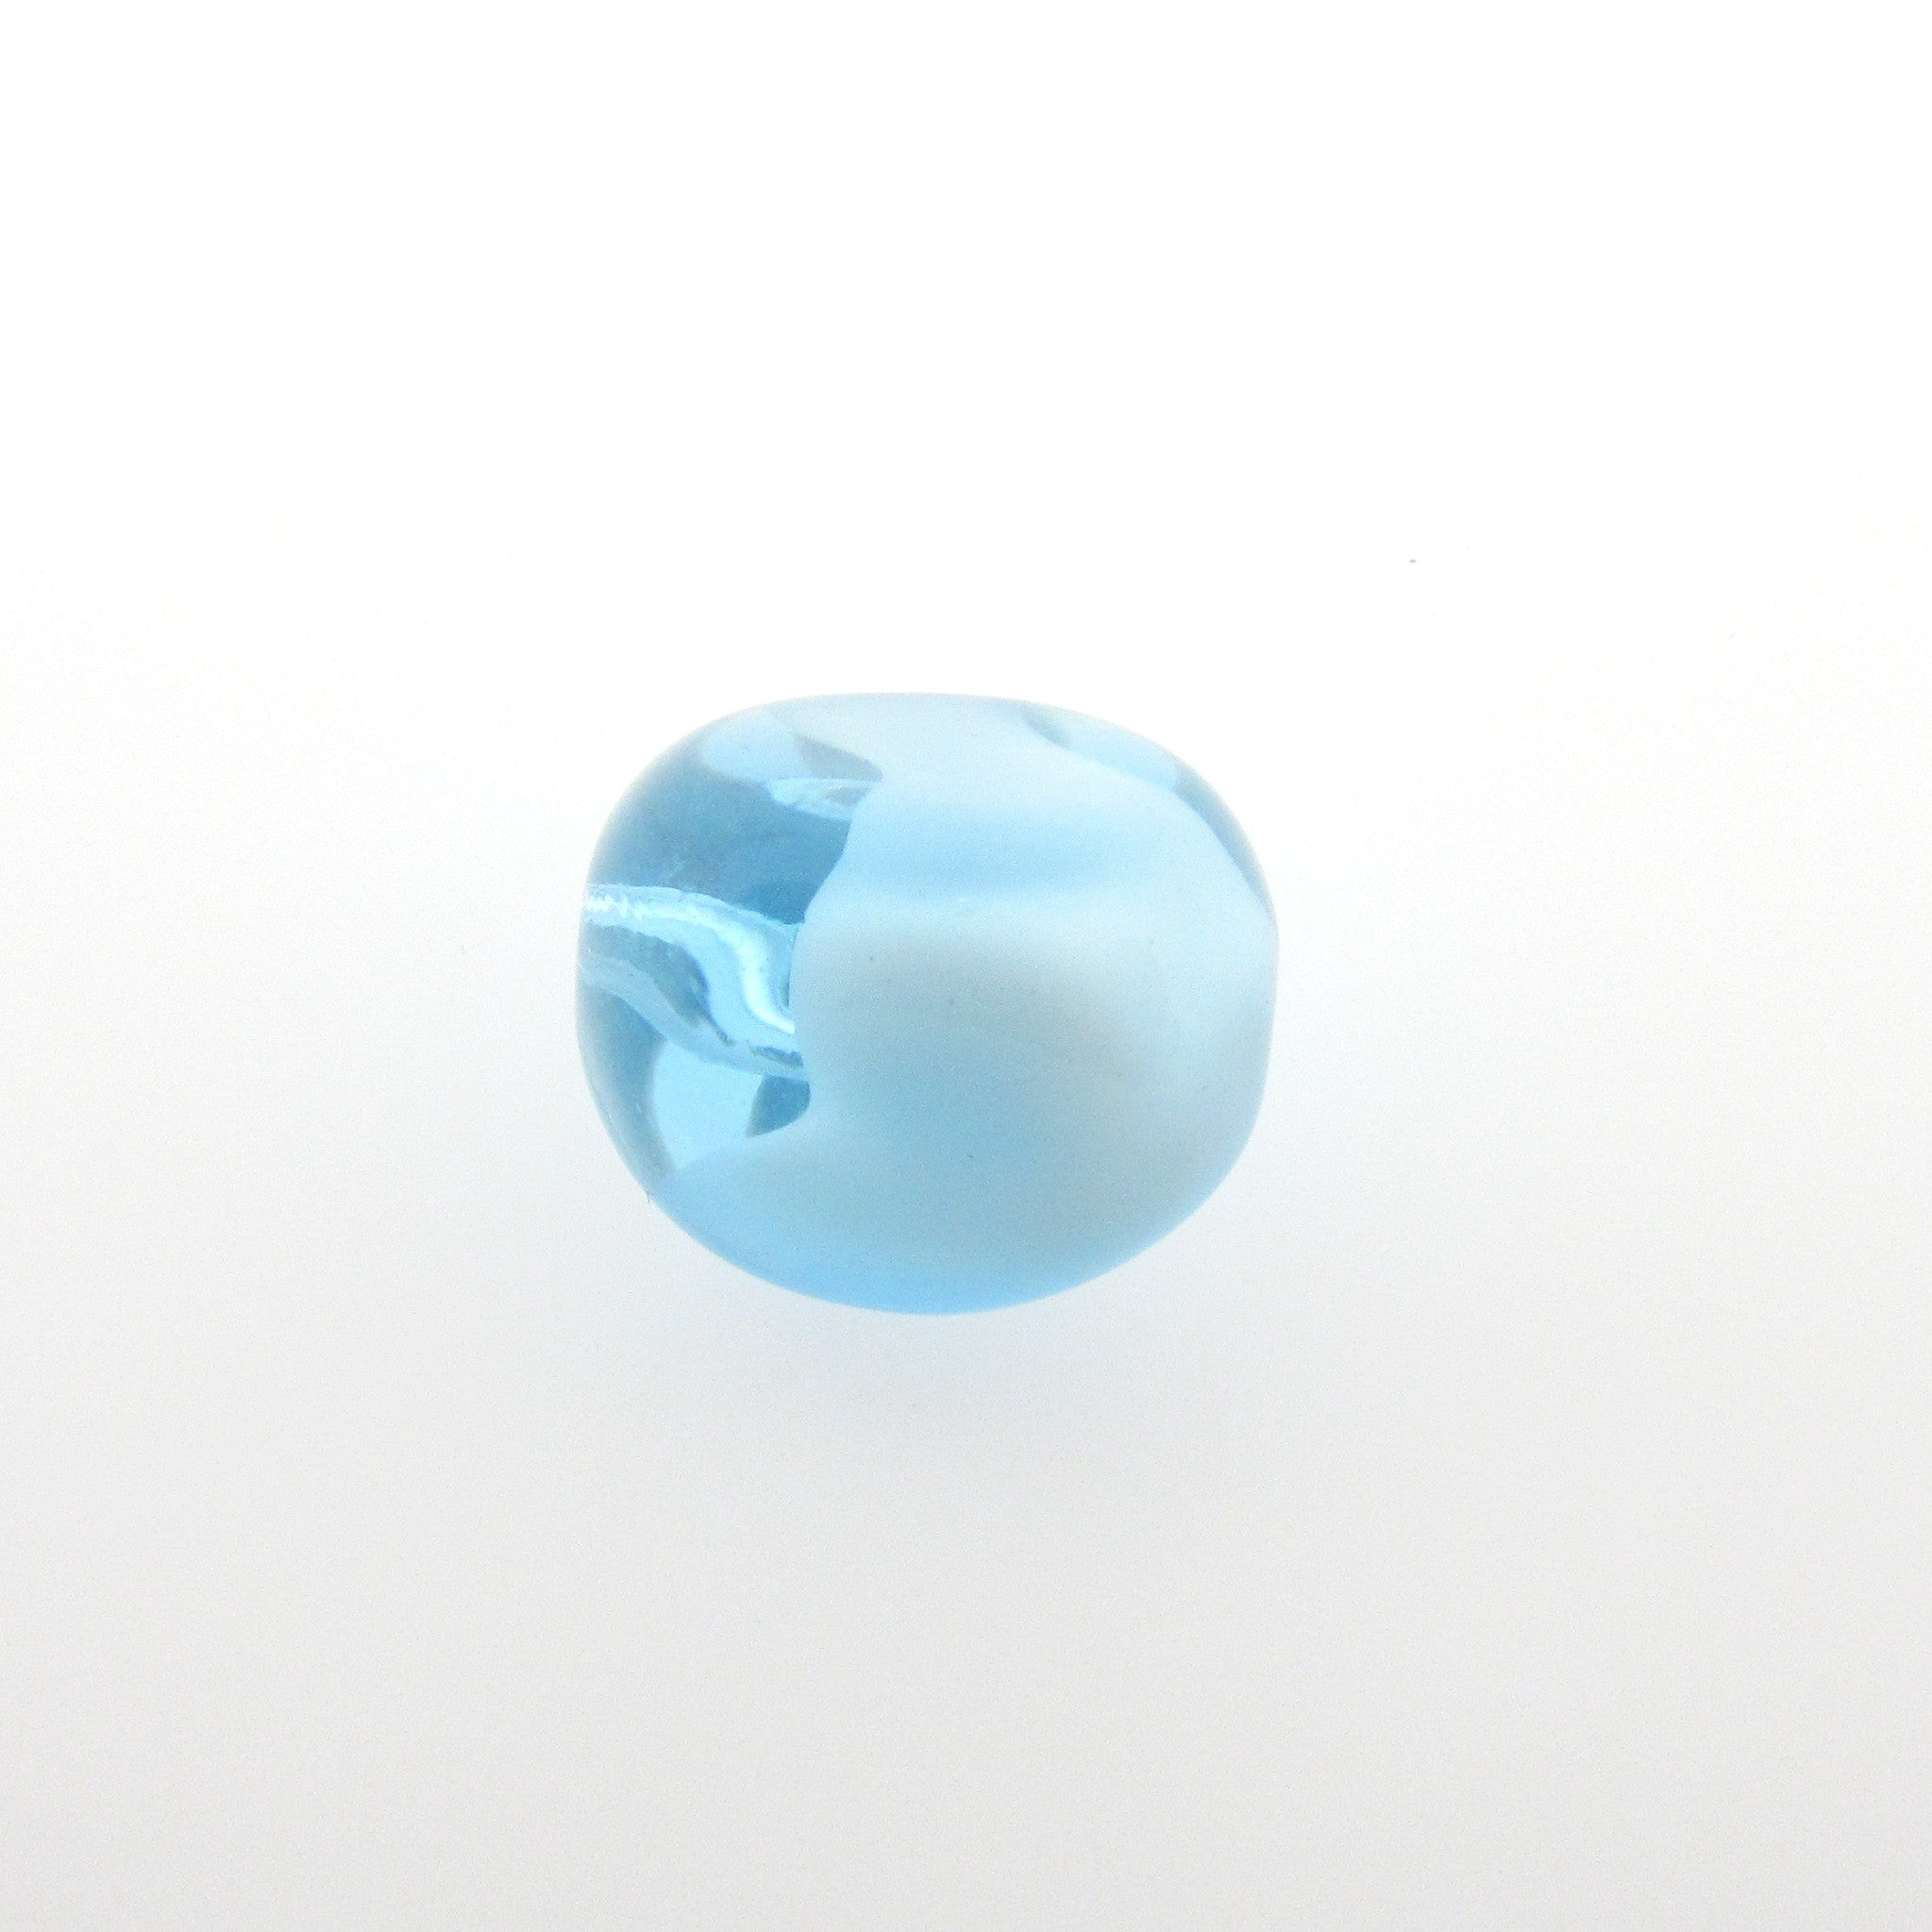 13MM Aqua Blue Givre Glass Bead (24 pieces)